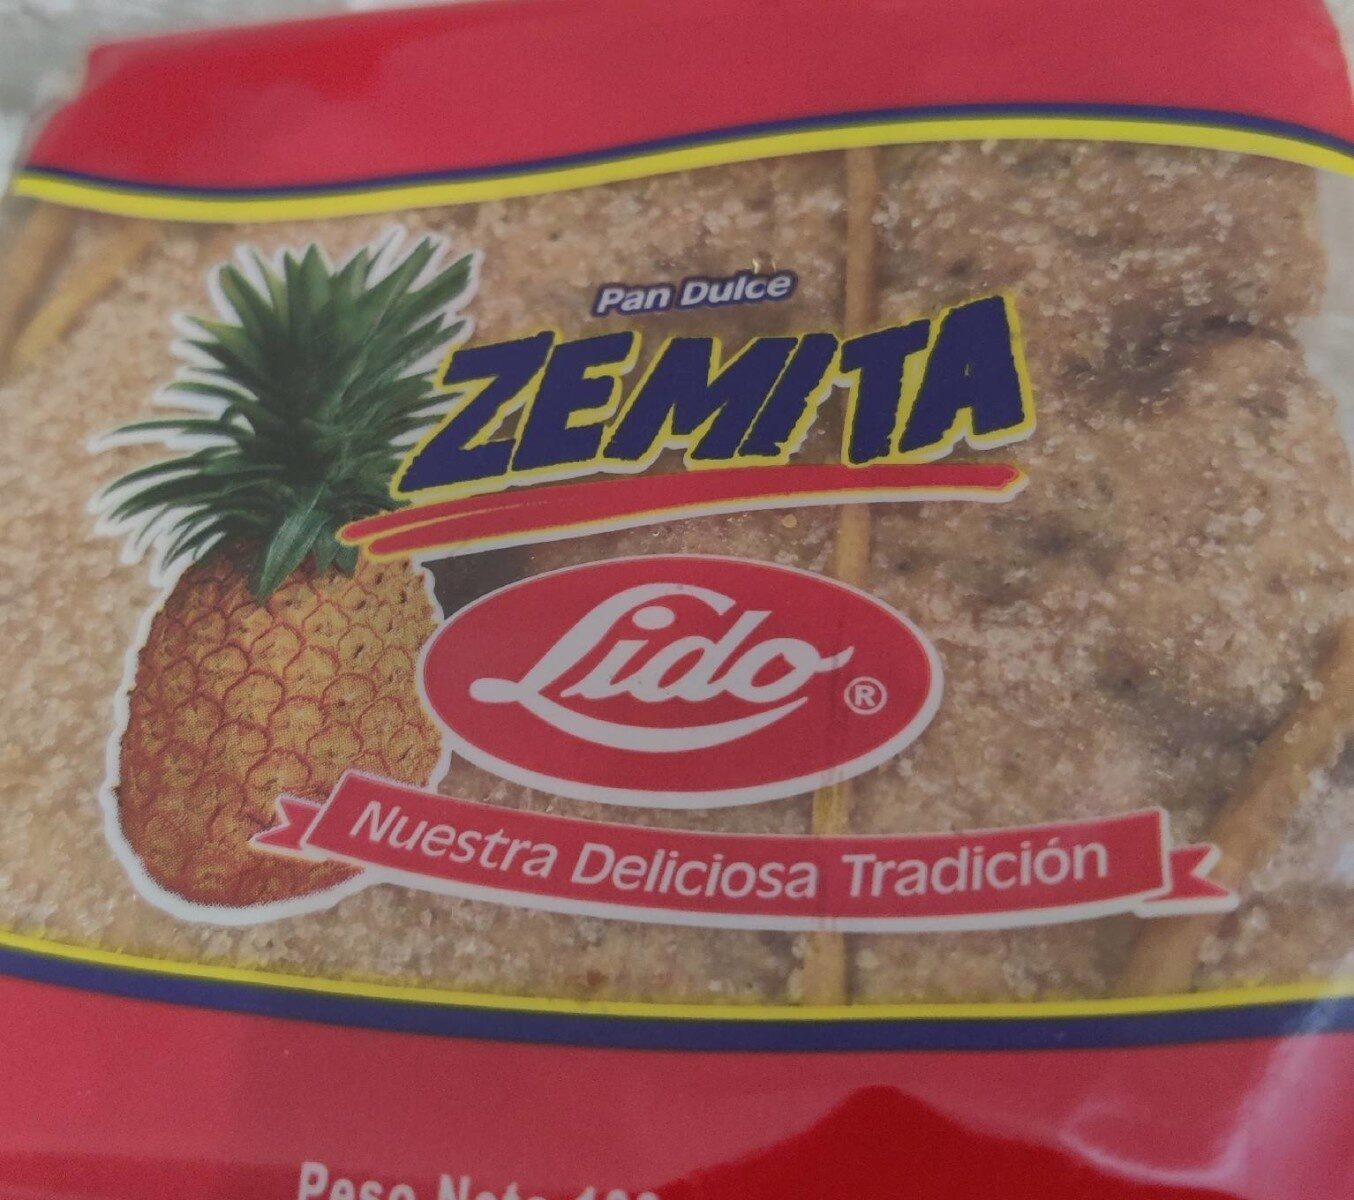 Zemita pan dulce - Product - en